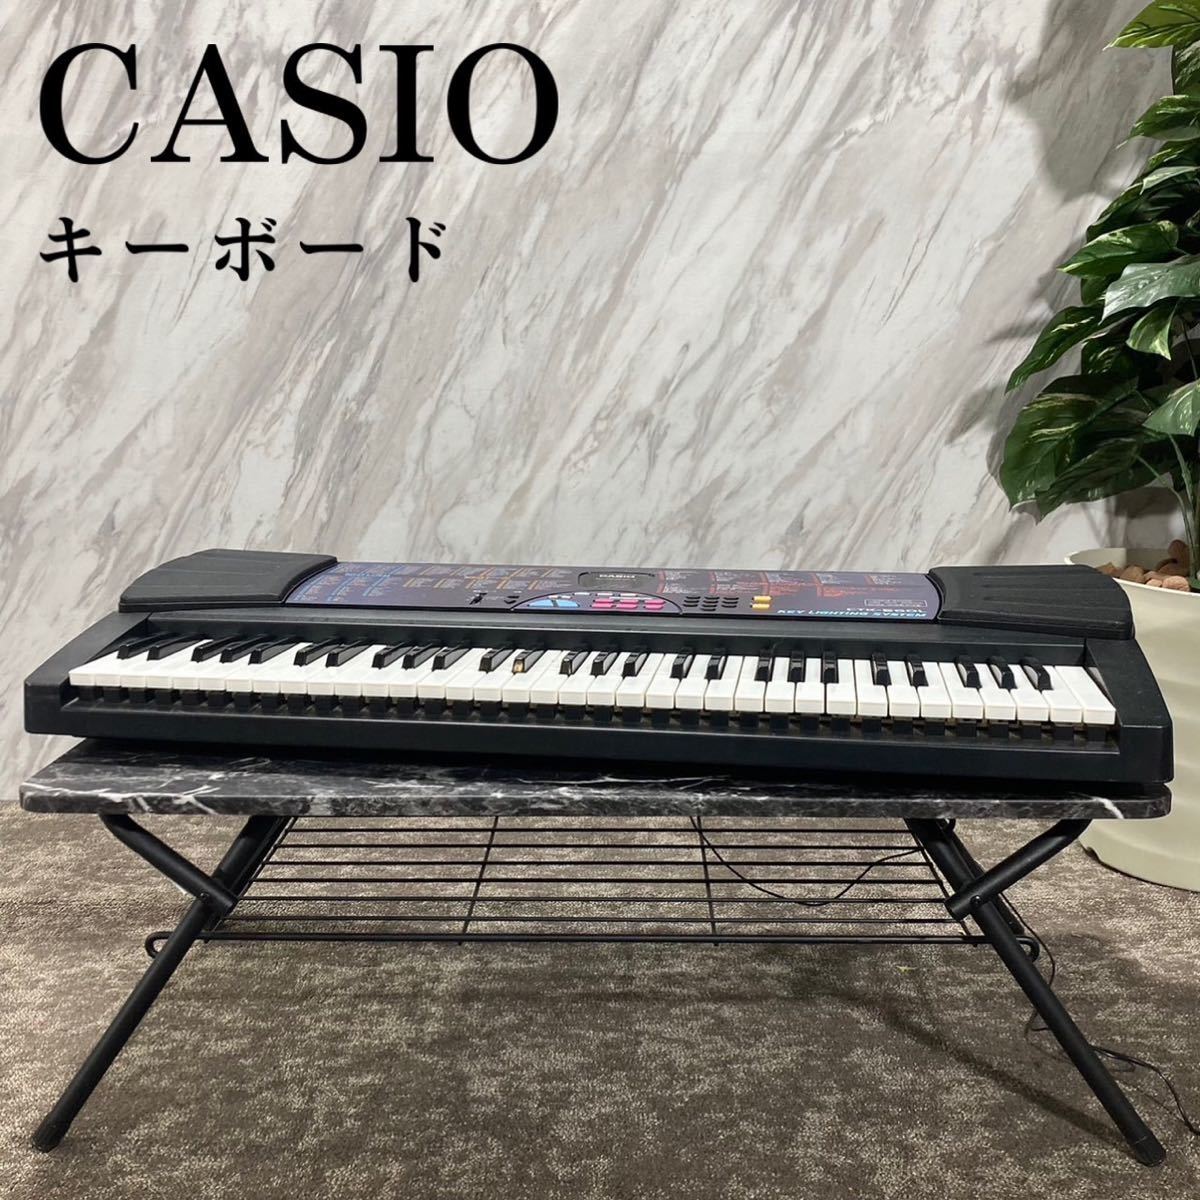 ヤフオク! -「ctk-560l」(鍵盤楽器) (楽器、器材)の落札相場・落札価格